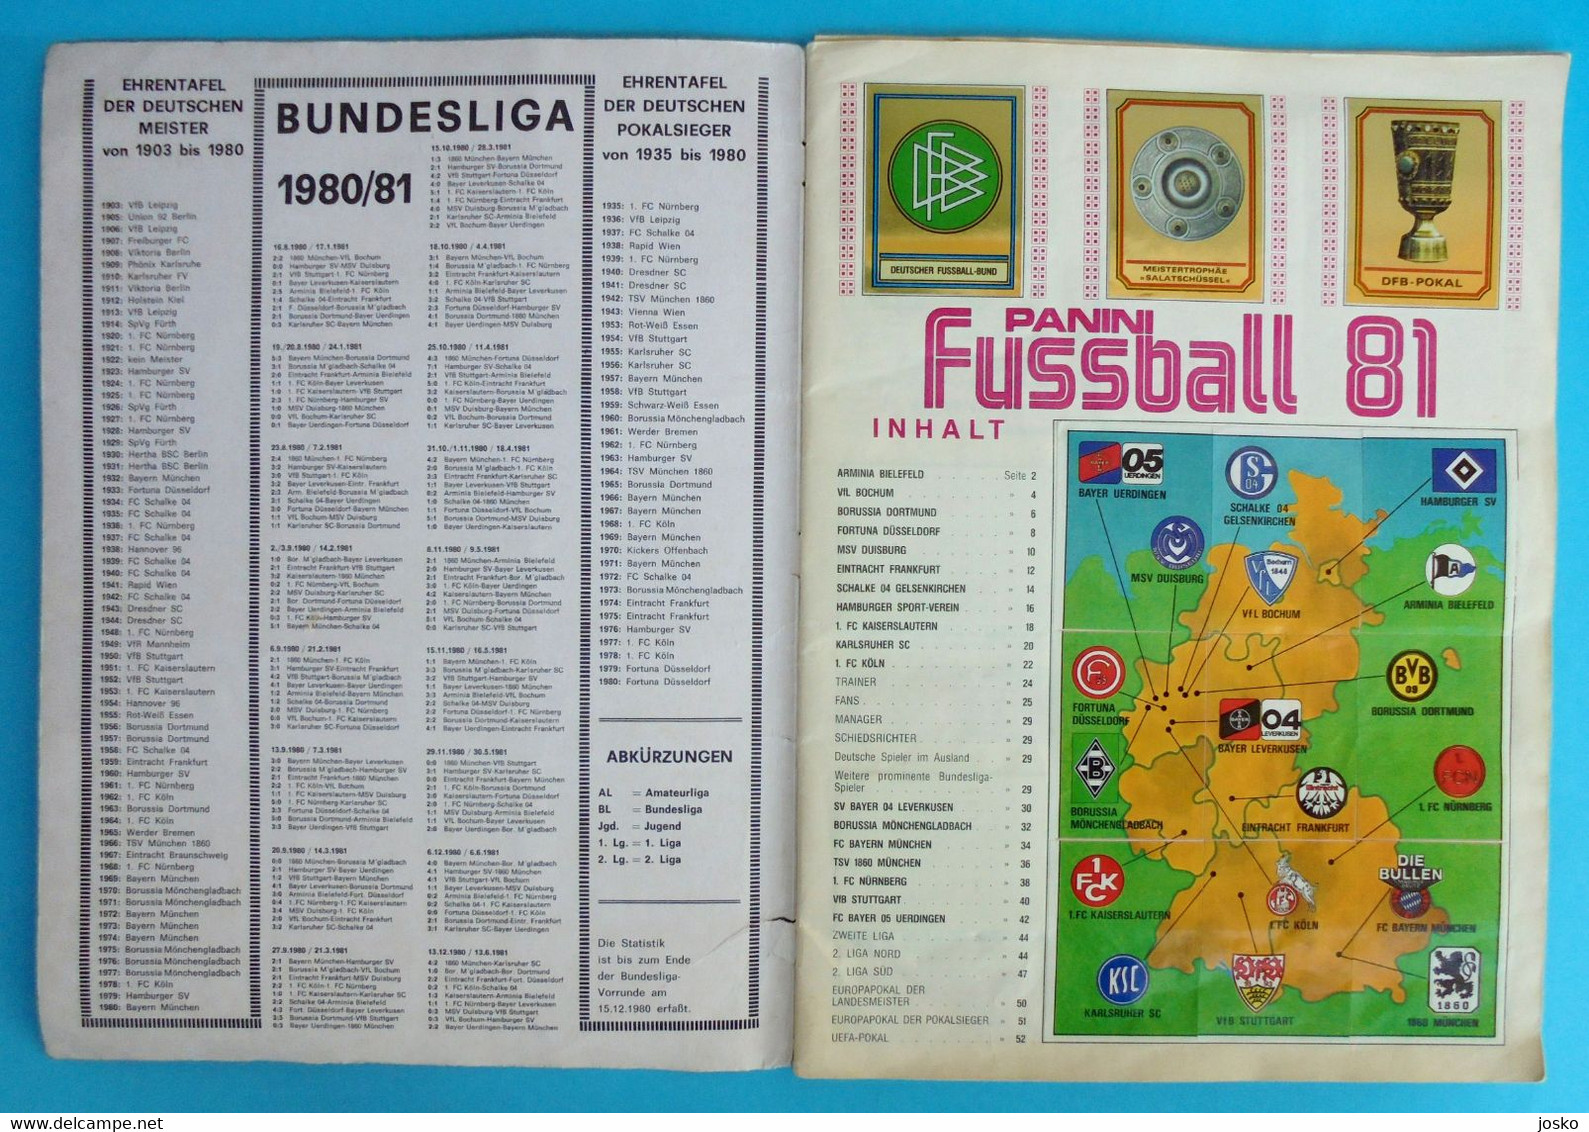 FUSSBALL 81 - Panini Old German Album * COMPLETE * Football Soccer Calcio Foot Futbol Futebol Germany Deutschland - German Edition